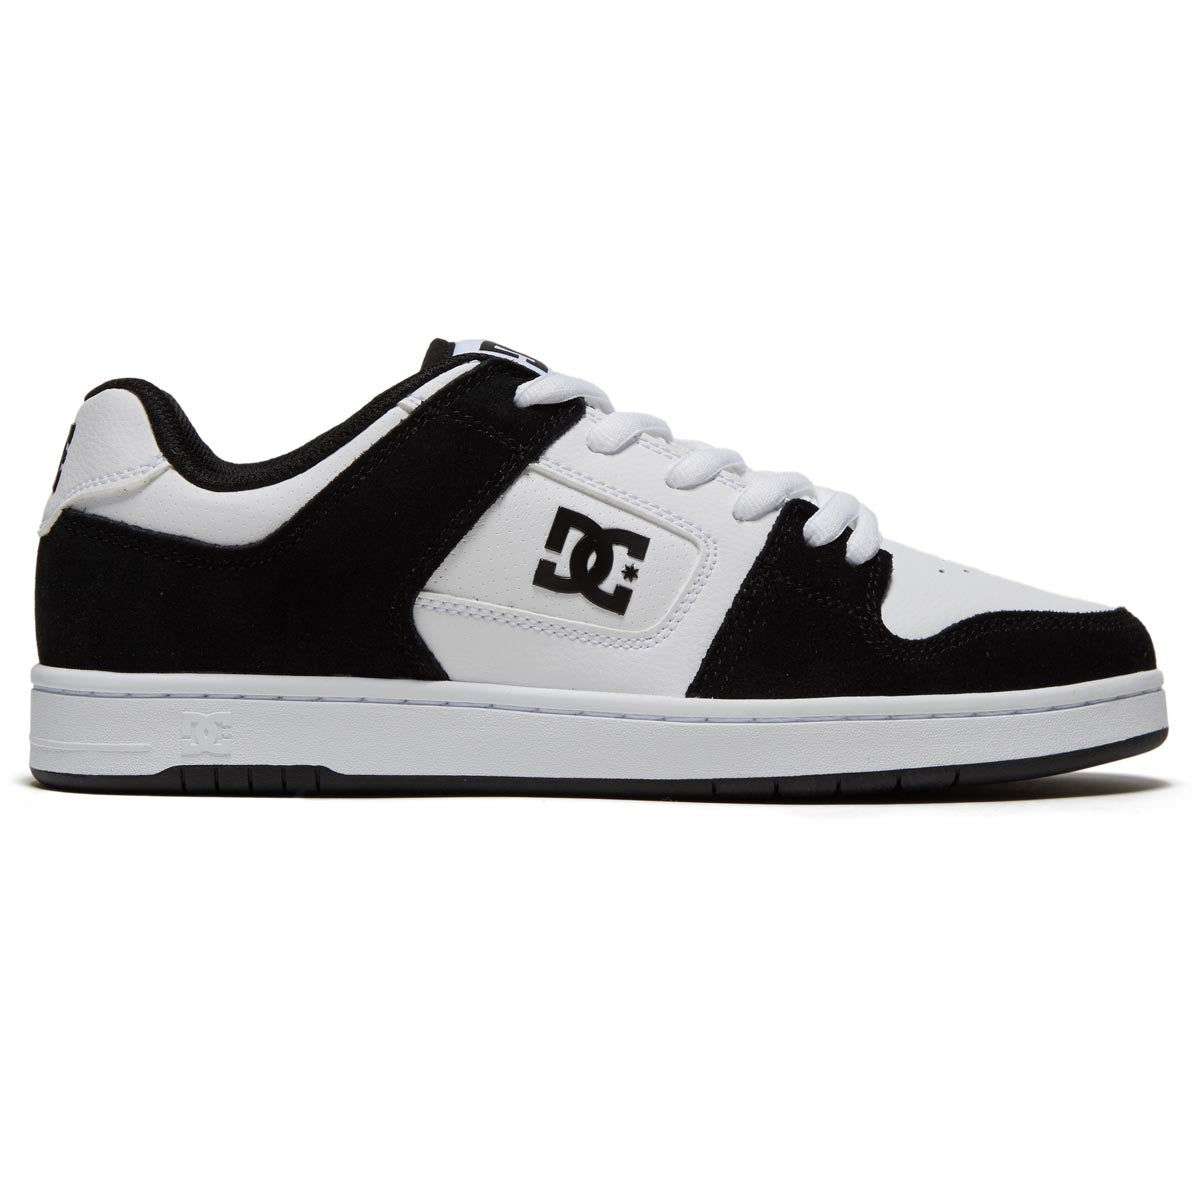 DC Manteca 4 Shoes - White/Black image 1